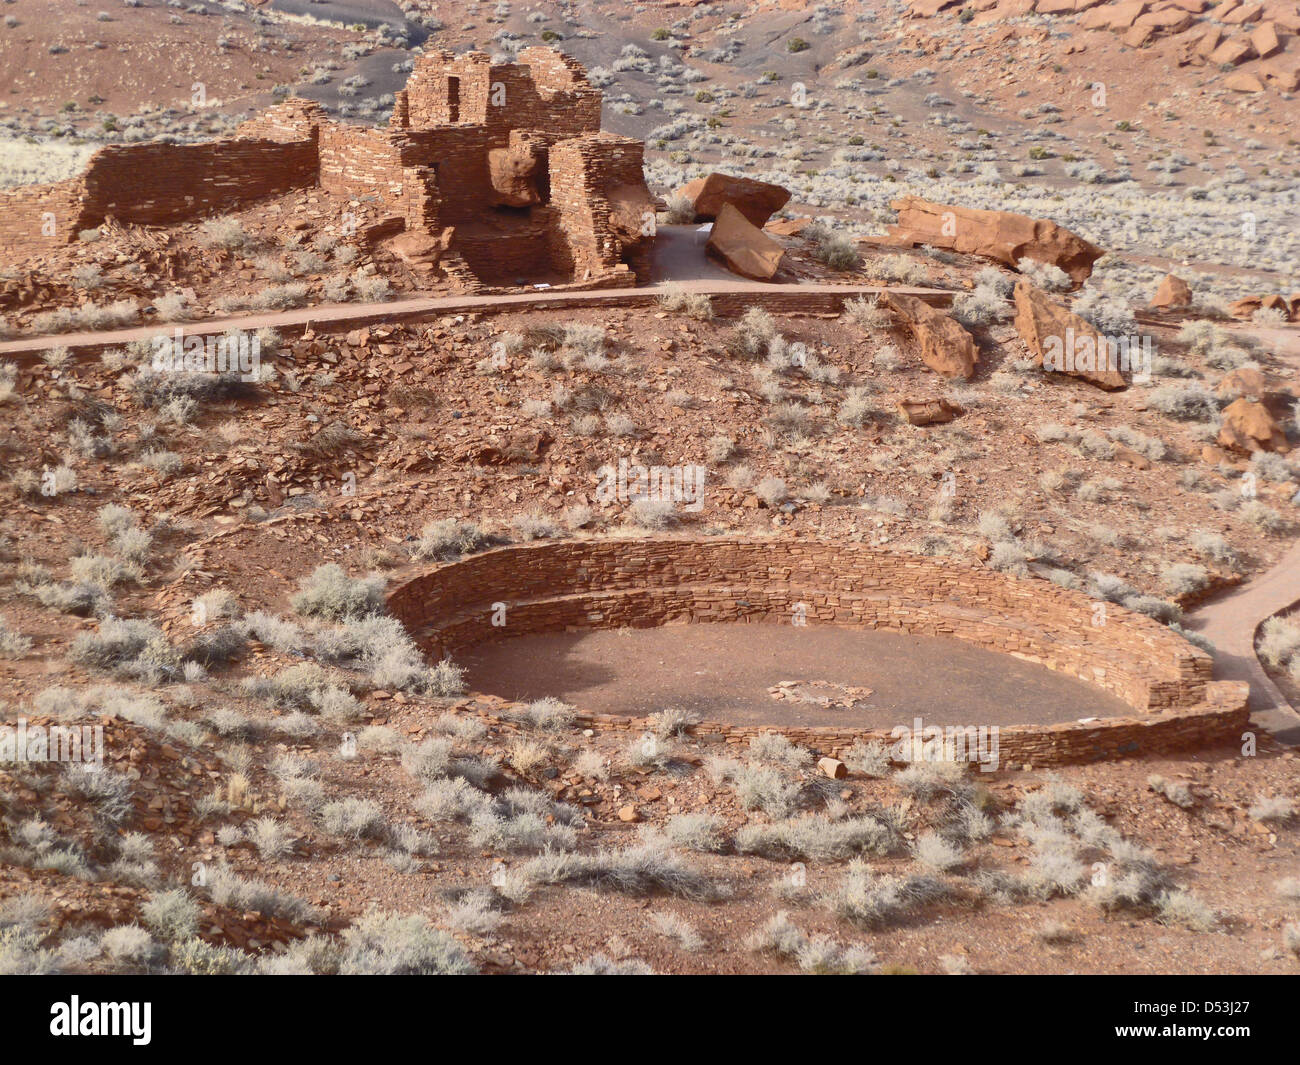 Wupatki National Monument.  Ruins of Adobe dwellings of Pueblo Indians near Flagstaff, Arizona, USA Stock Photo